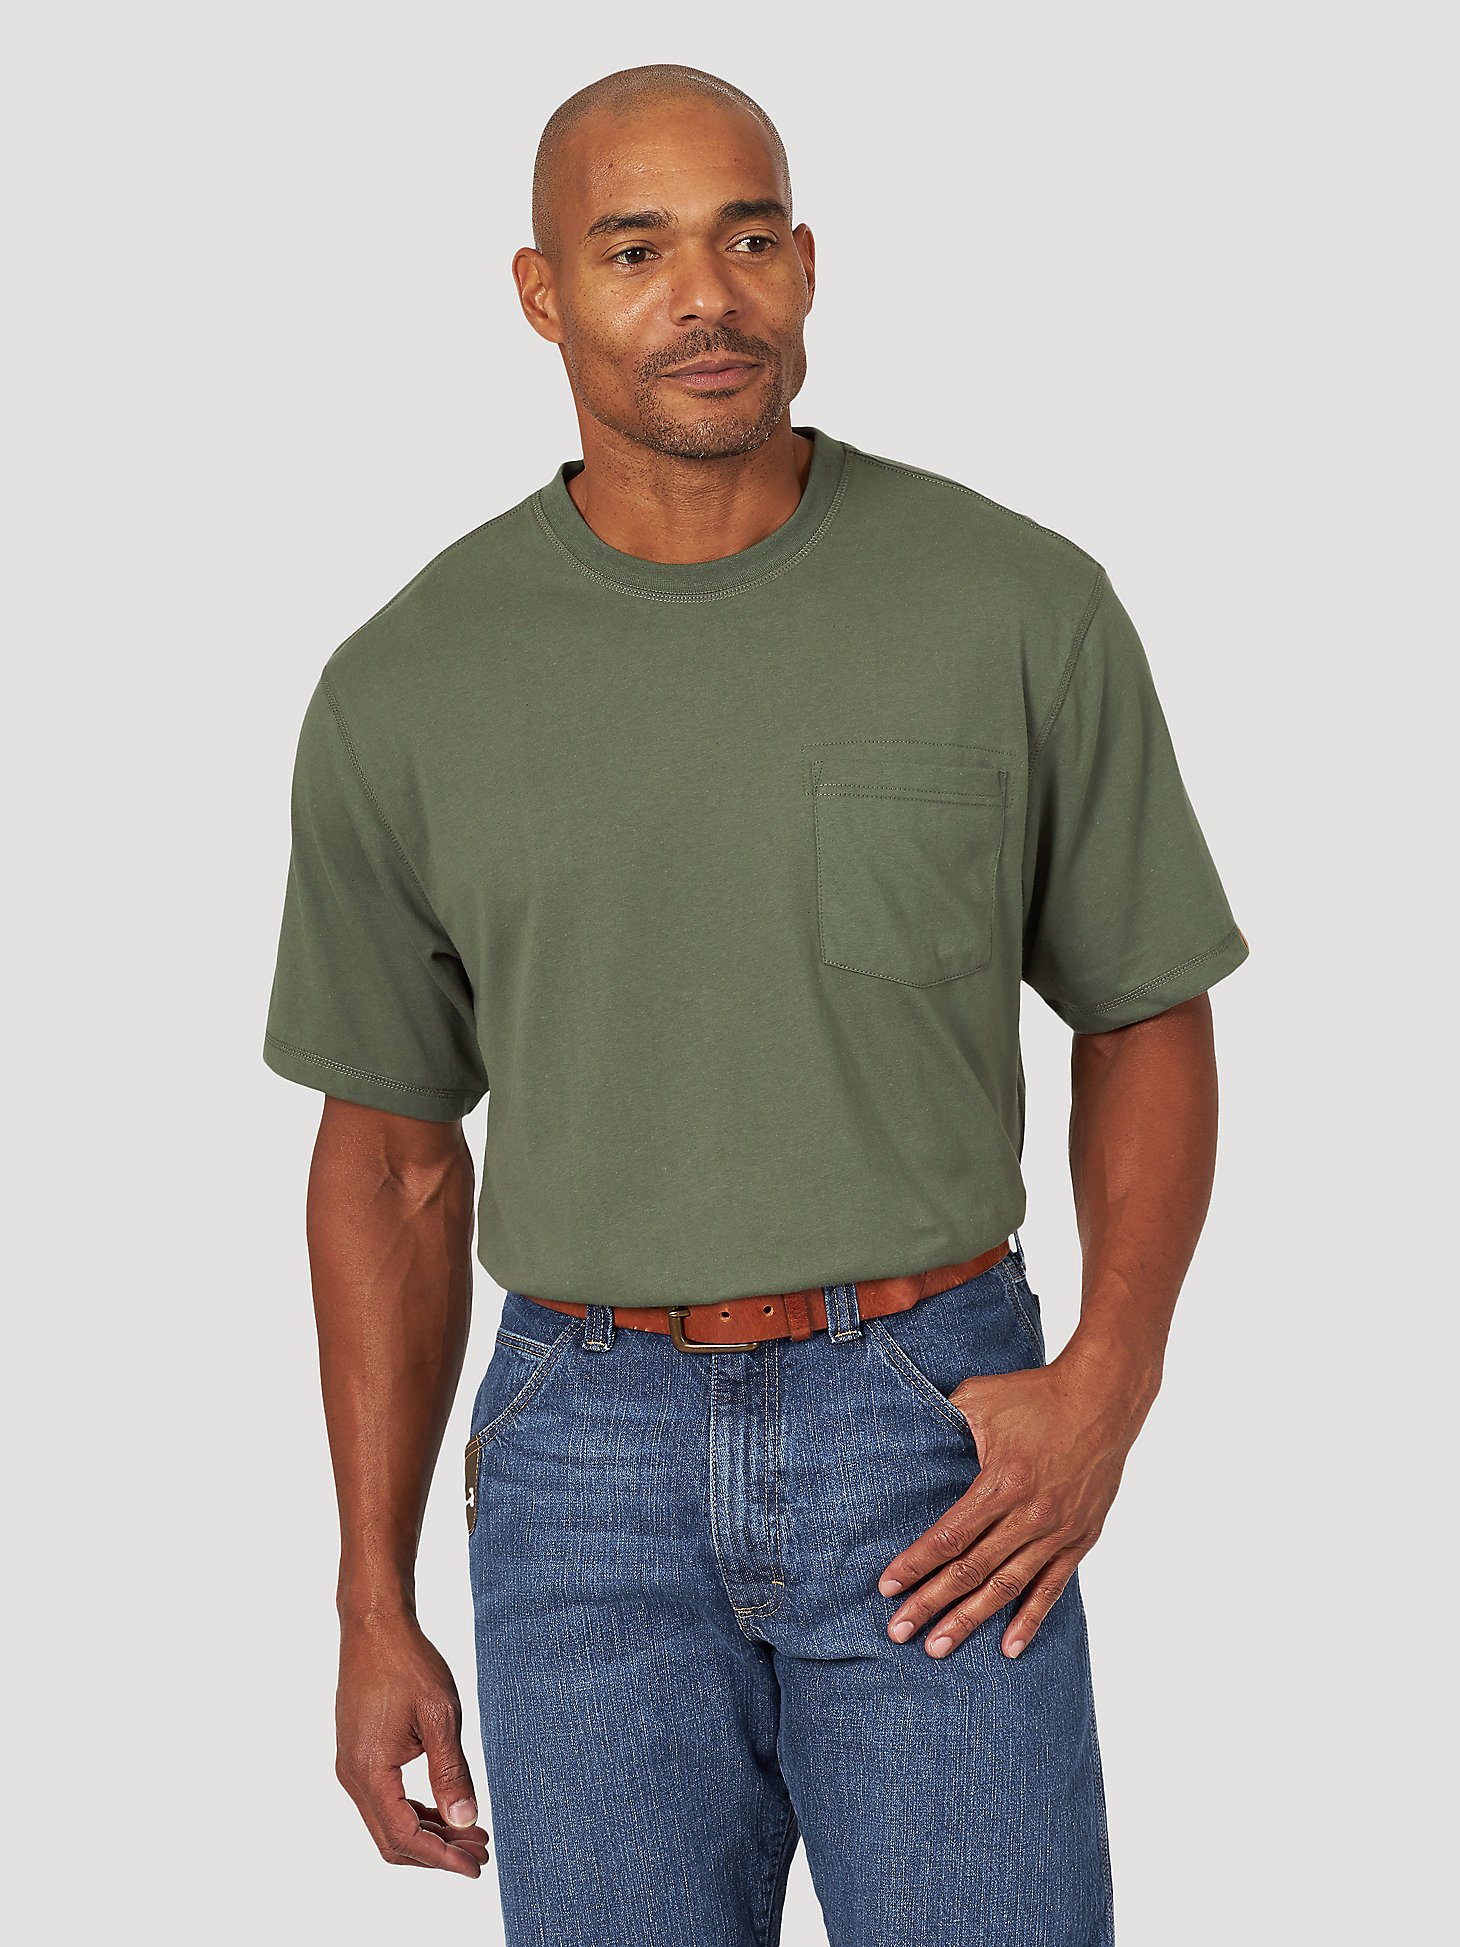 Wrangler® RIGGS Workwear® Short Sleeve 1 Pocket Performance T-Shirt in Hazel Green main view